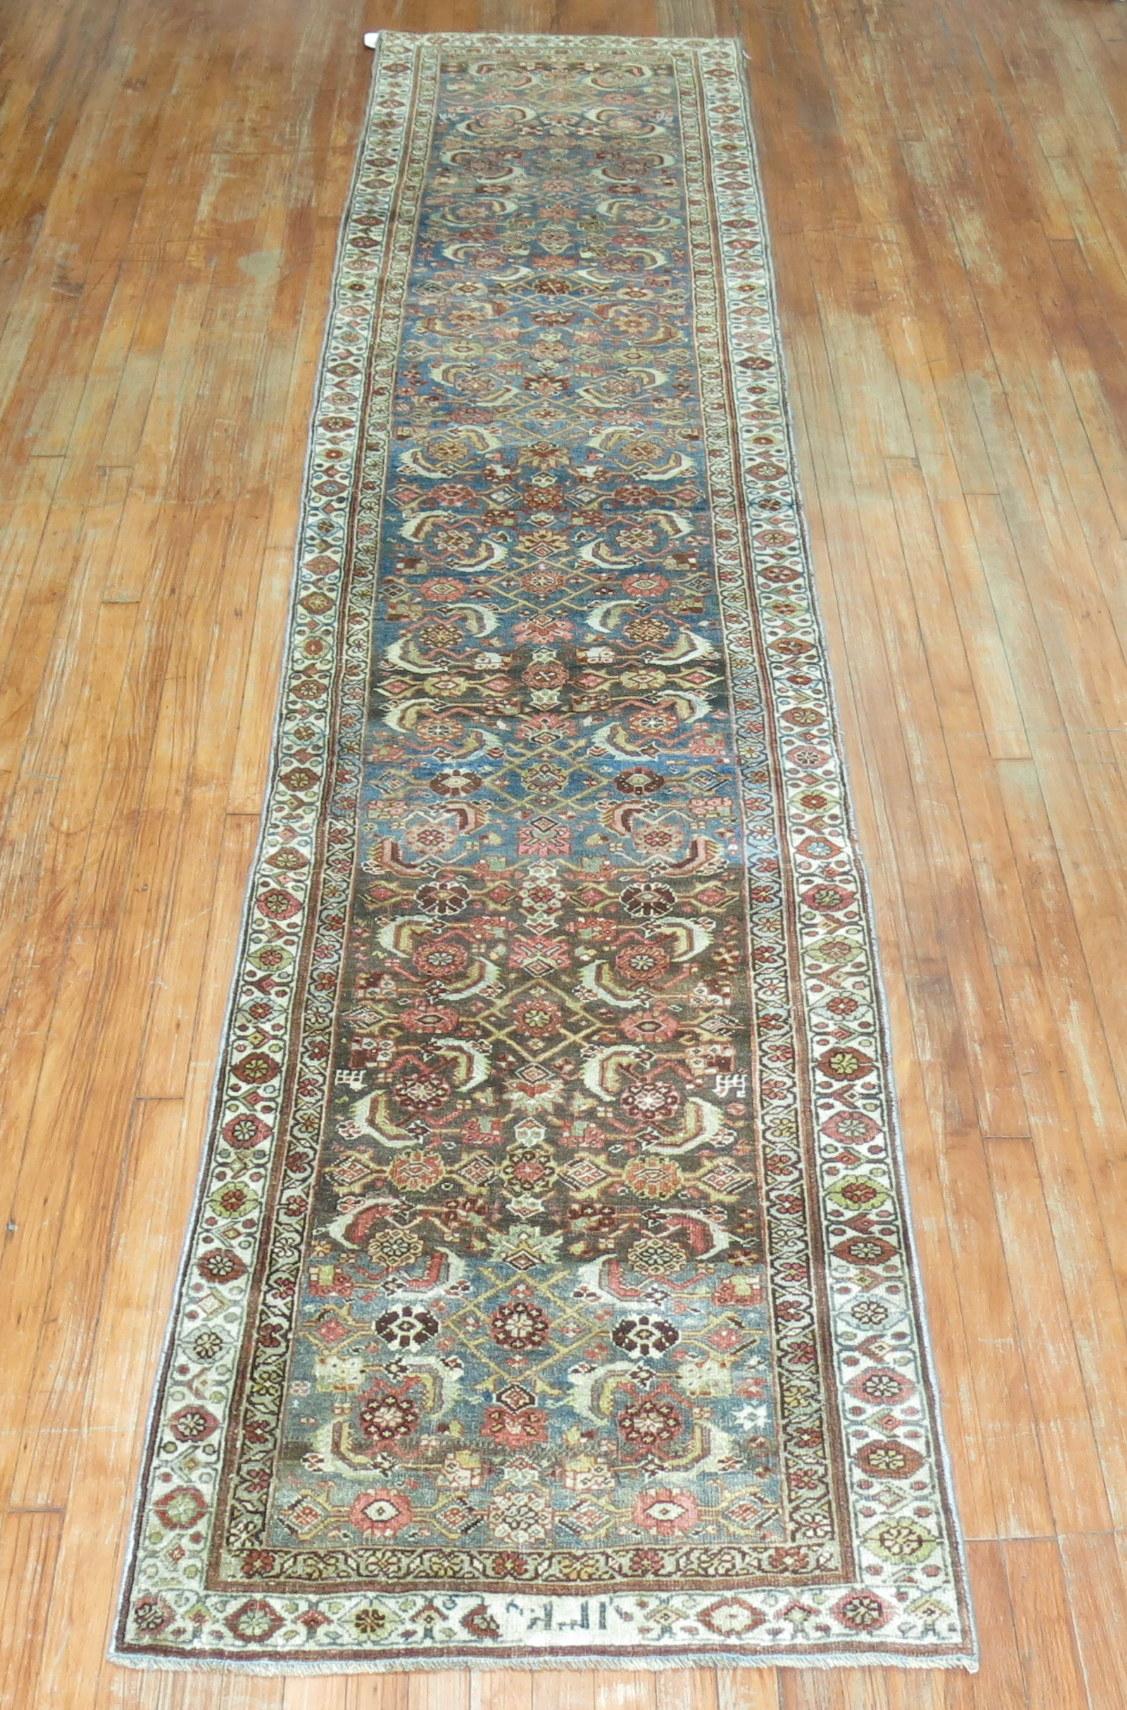 Early 20th century Persian Bidjar rug in earth tones.

 